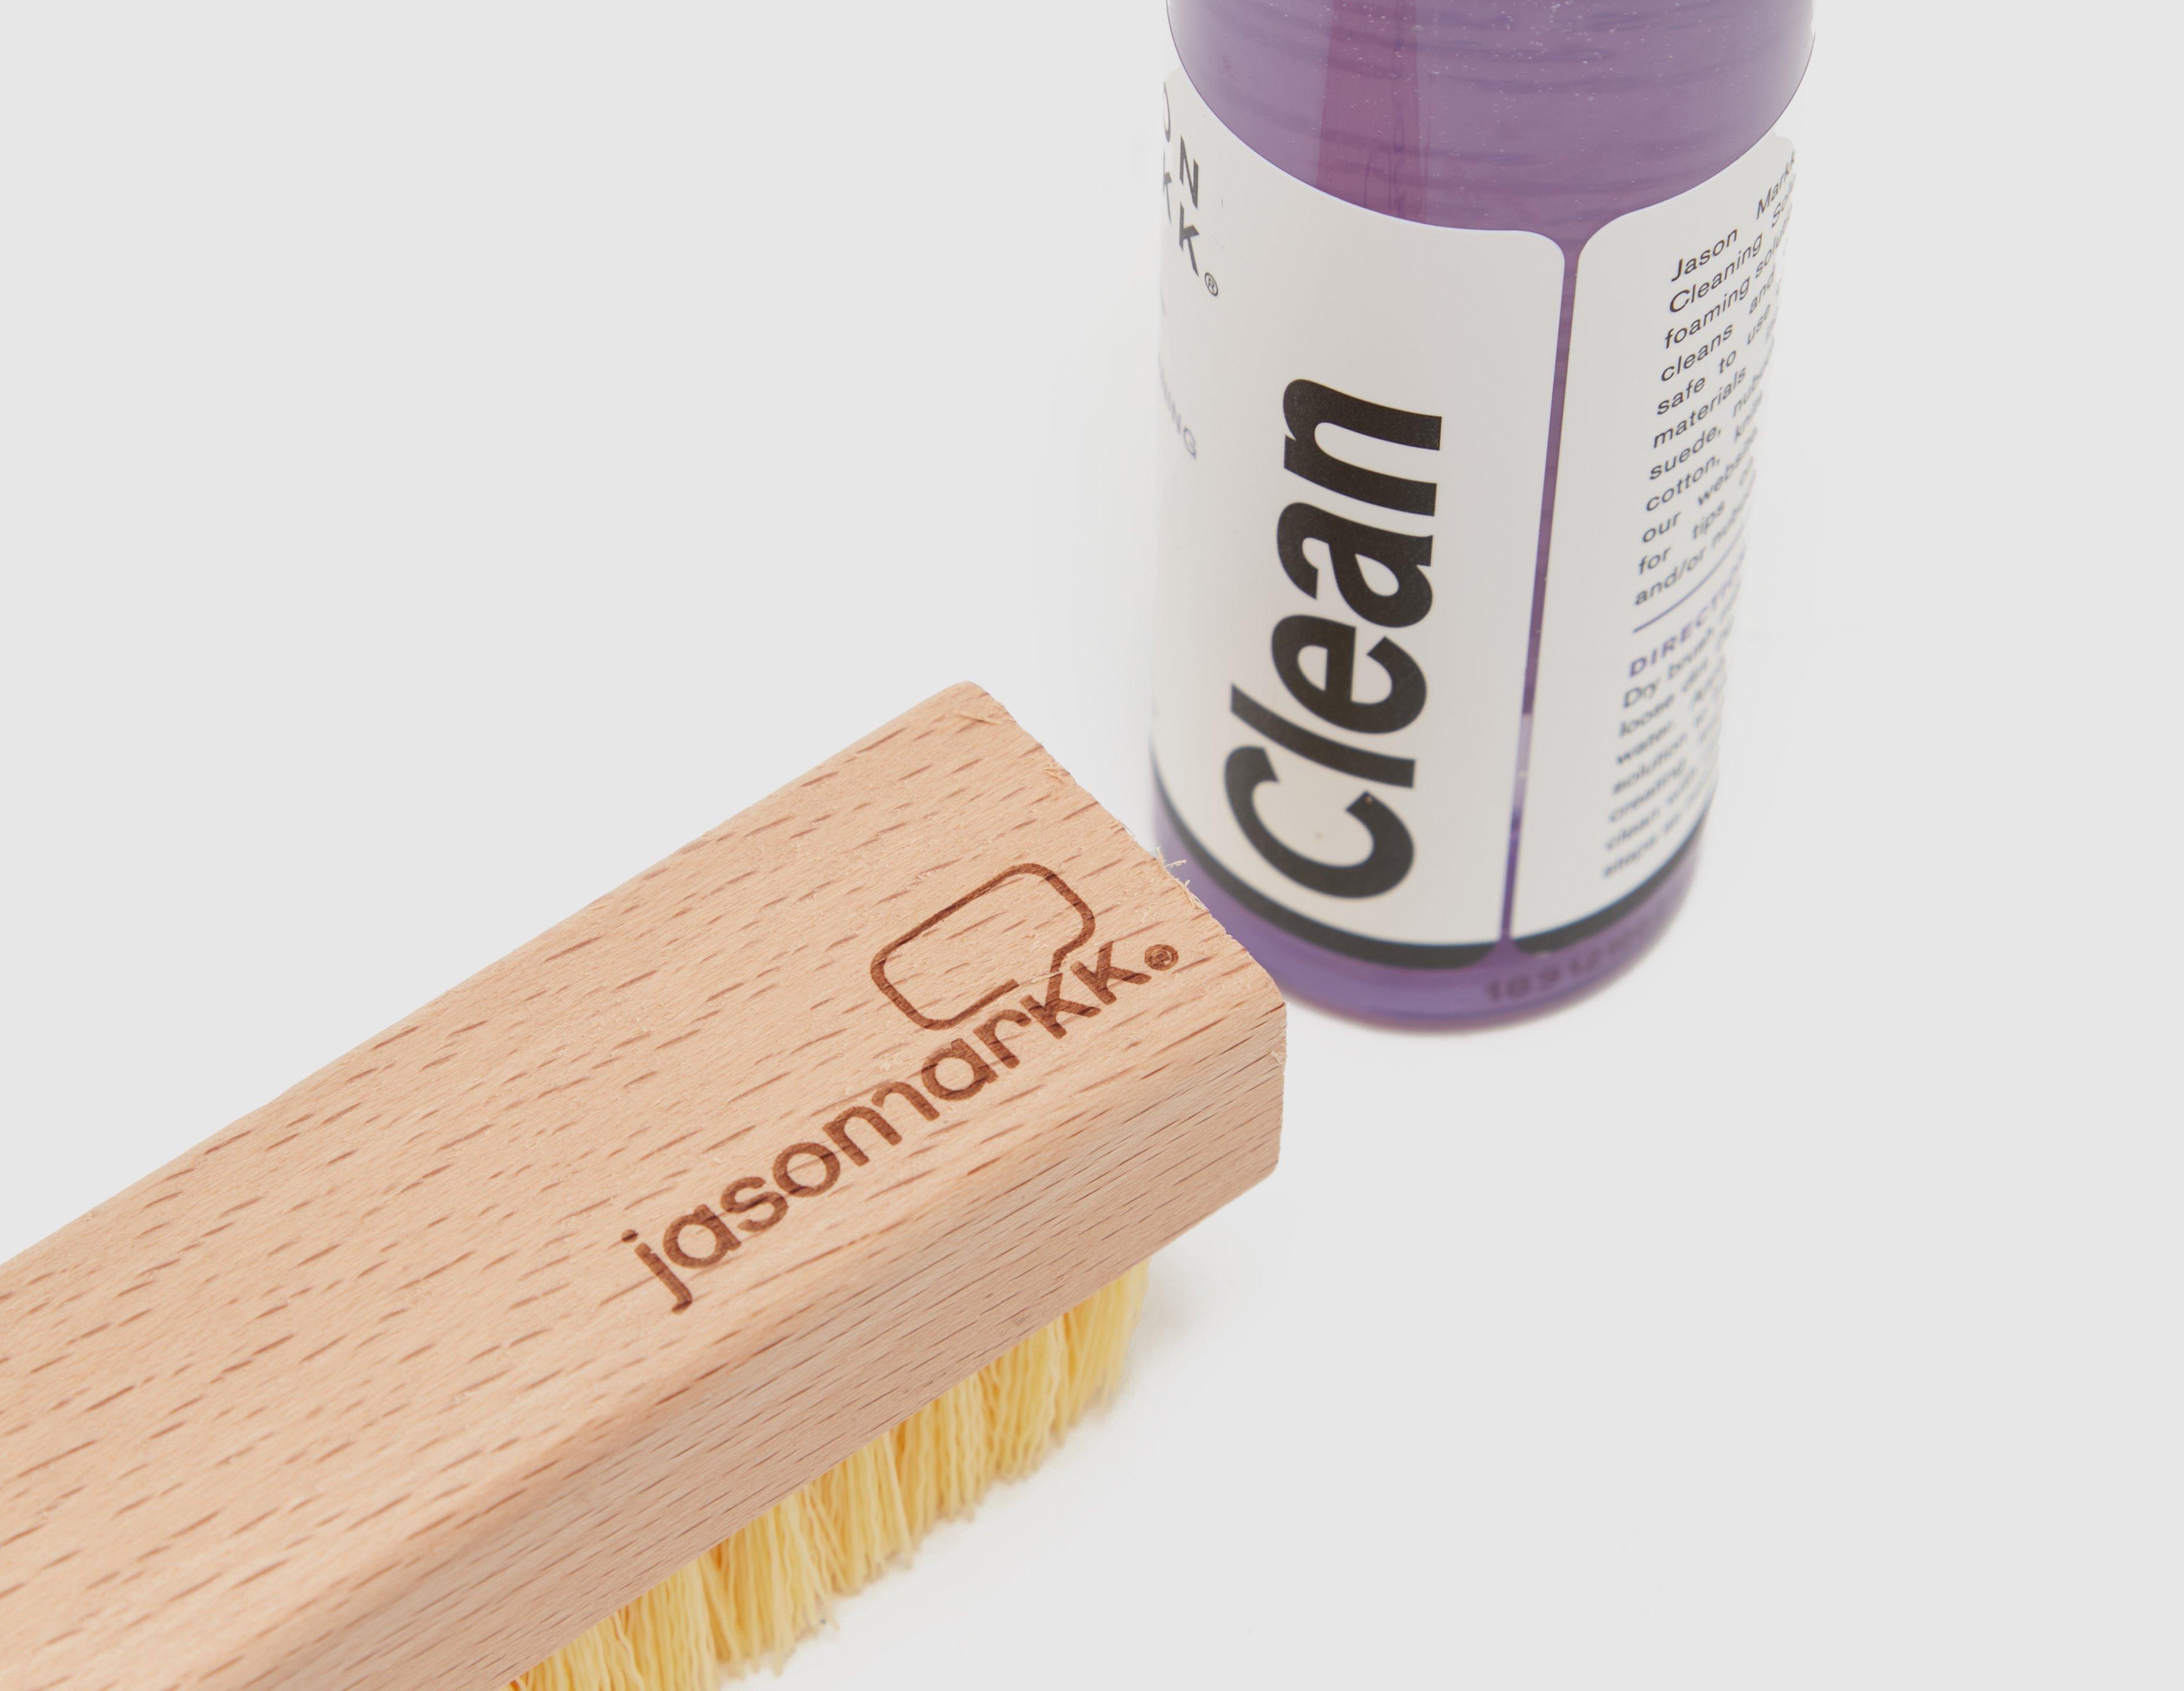 Ready-To-Use Foam + Premium Brush Bundle – Jason Markk